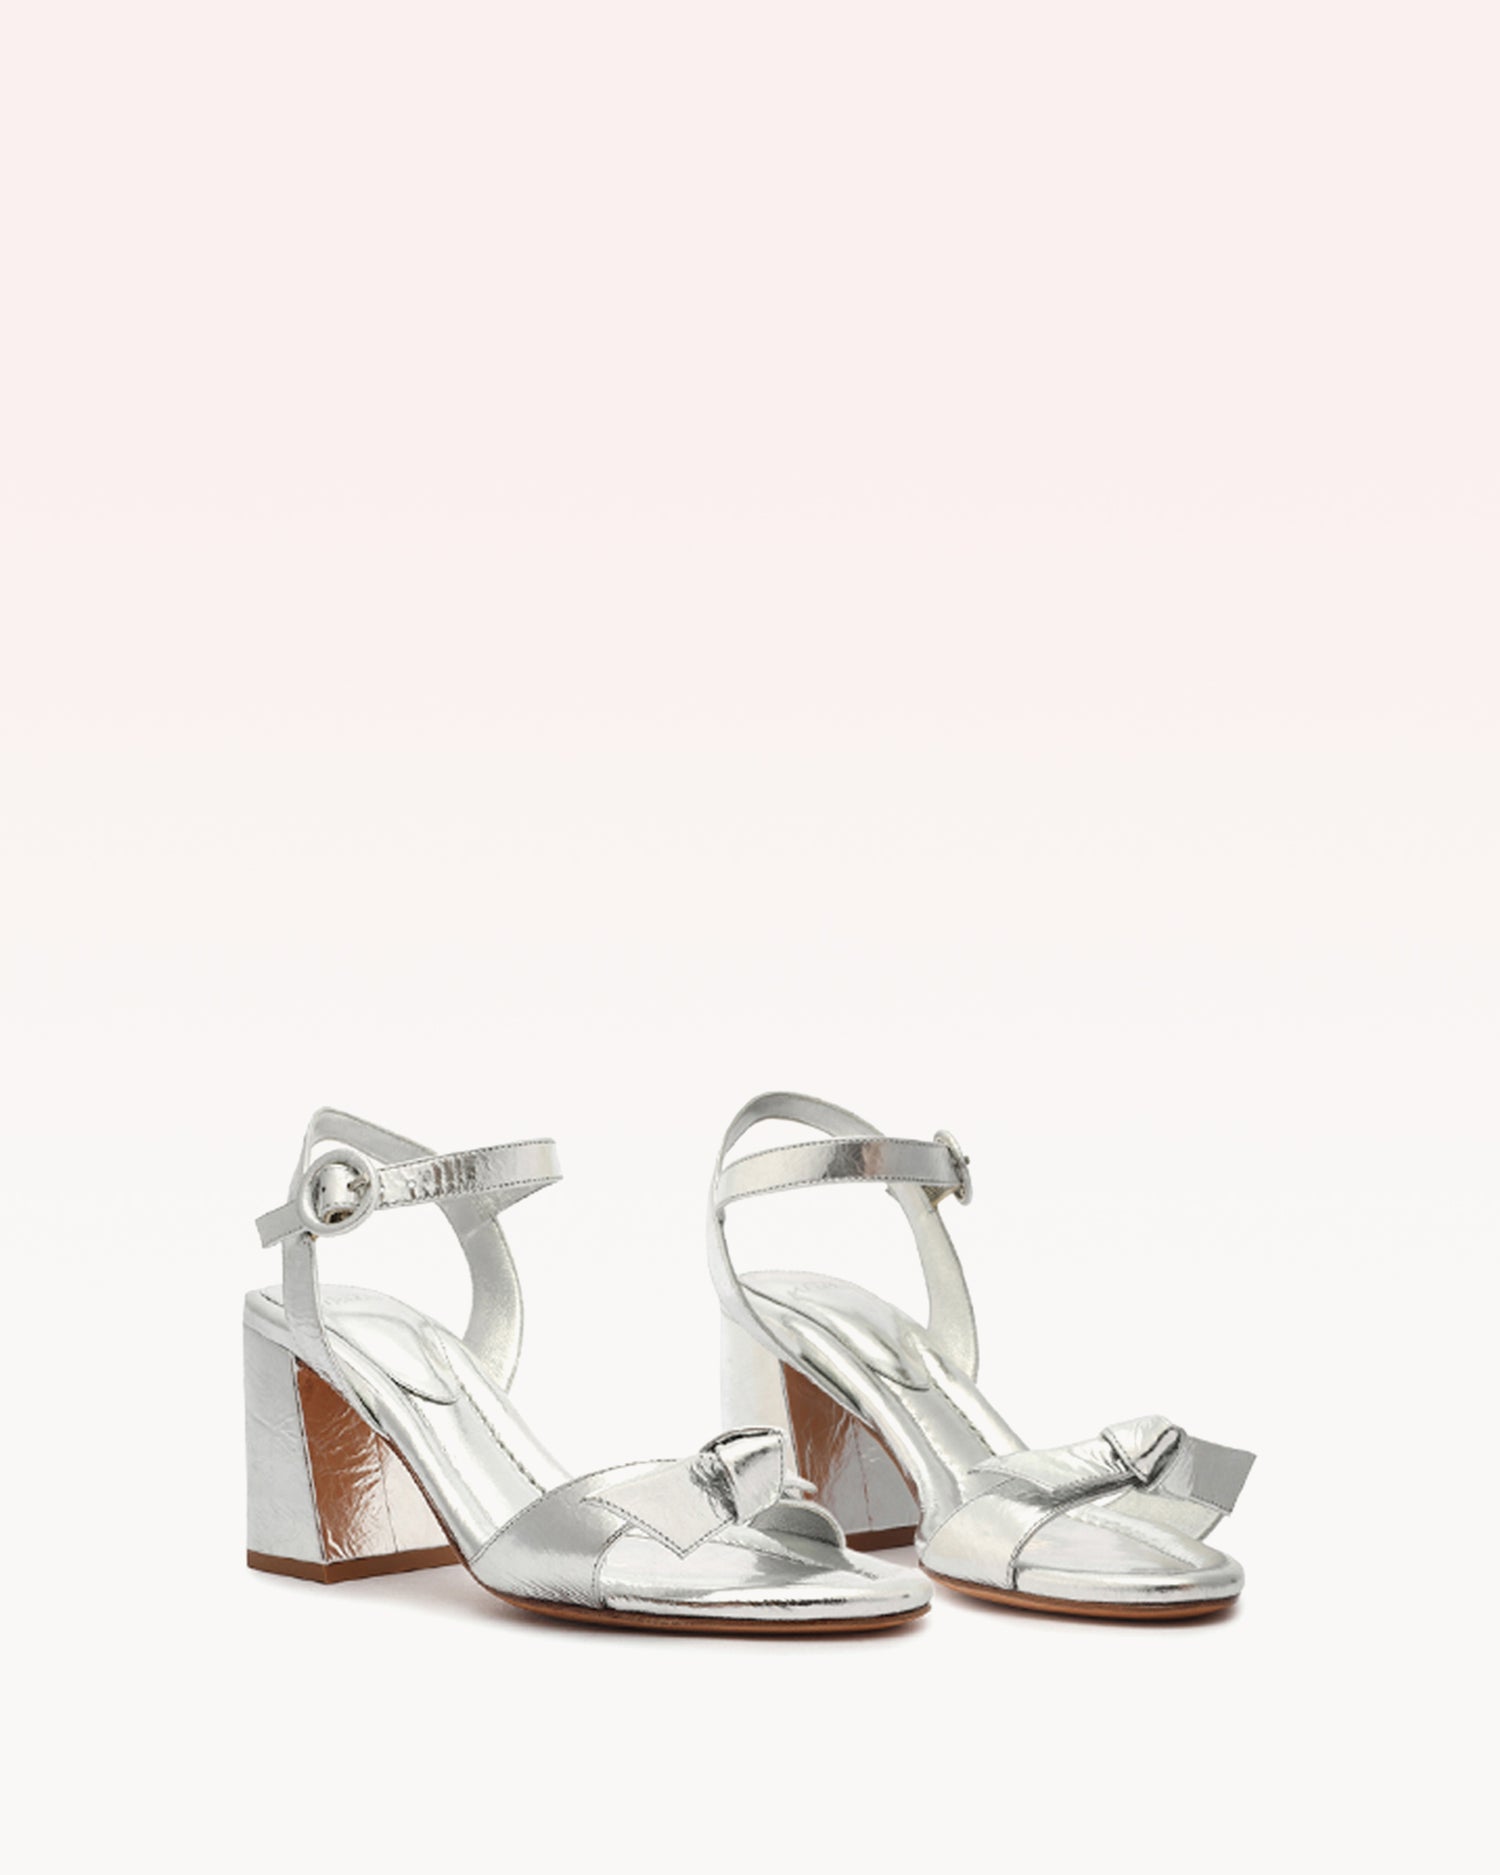 Silver open toe block heeled sandals